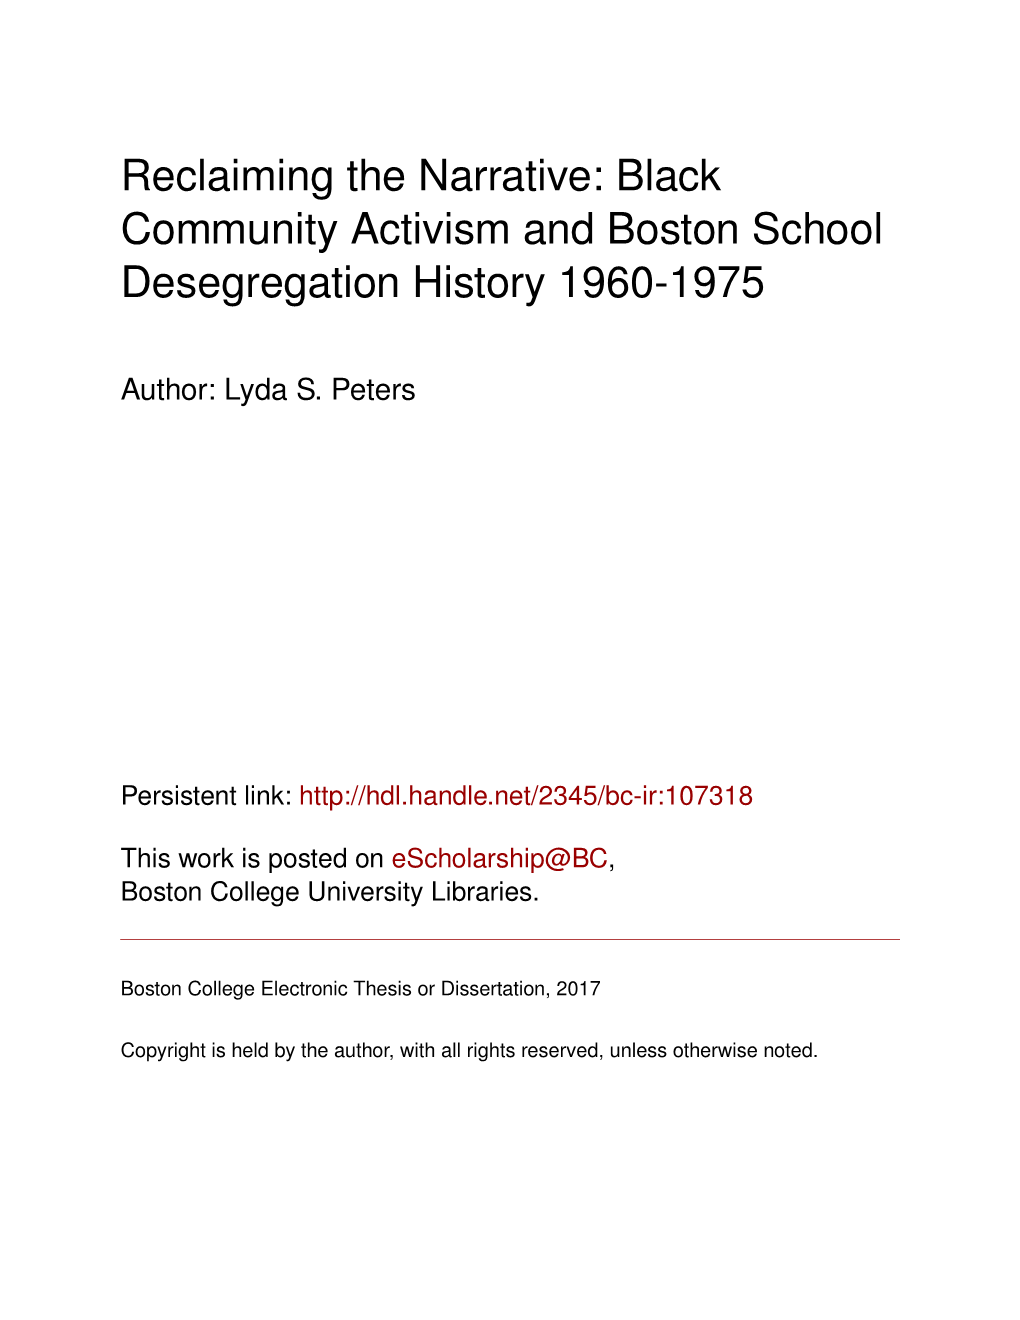 Black Community Activism and Boston School Desegregation History 1960-1975